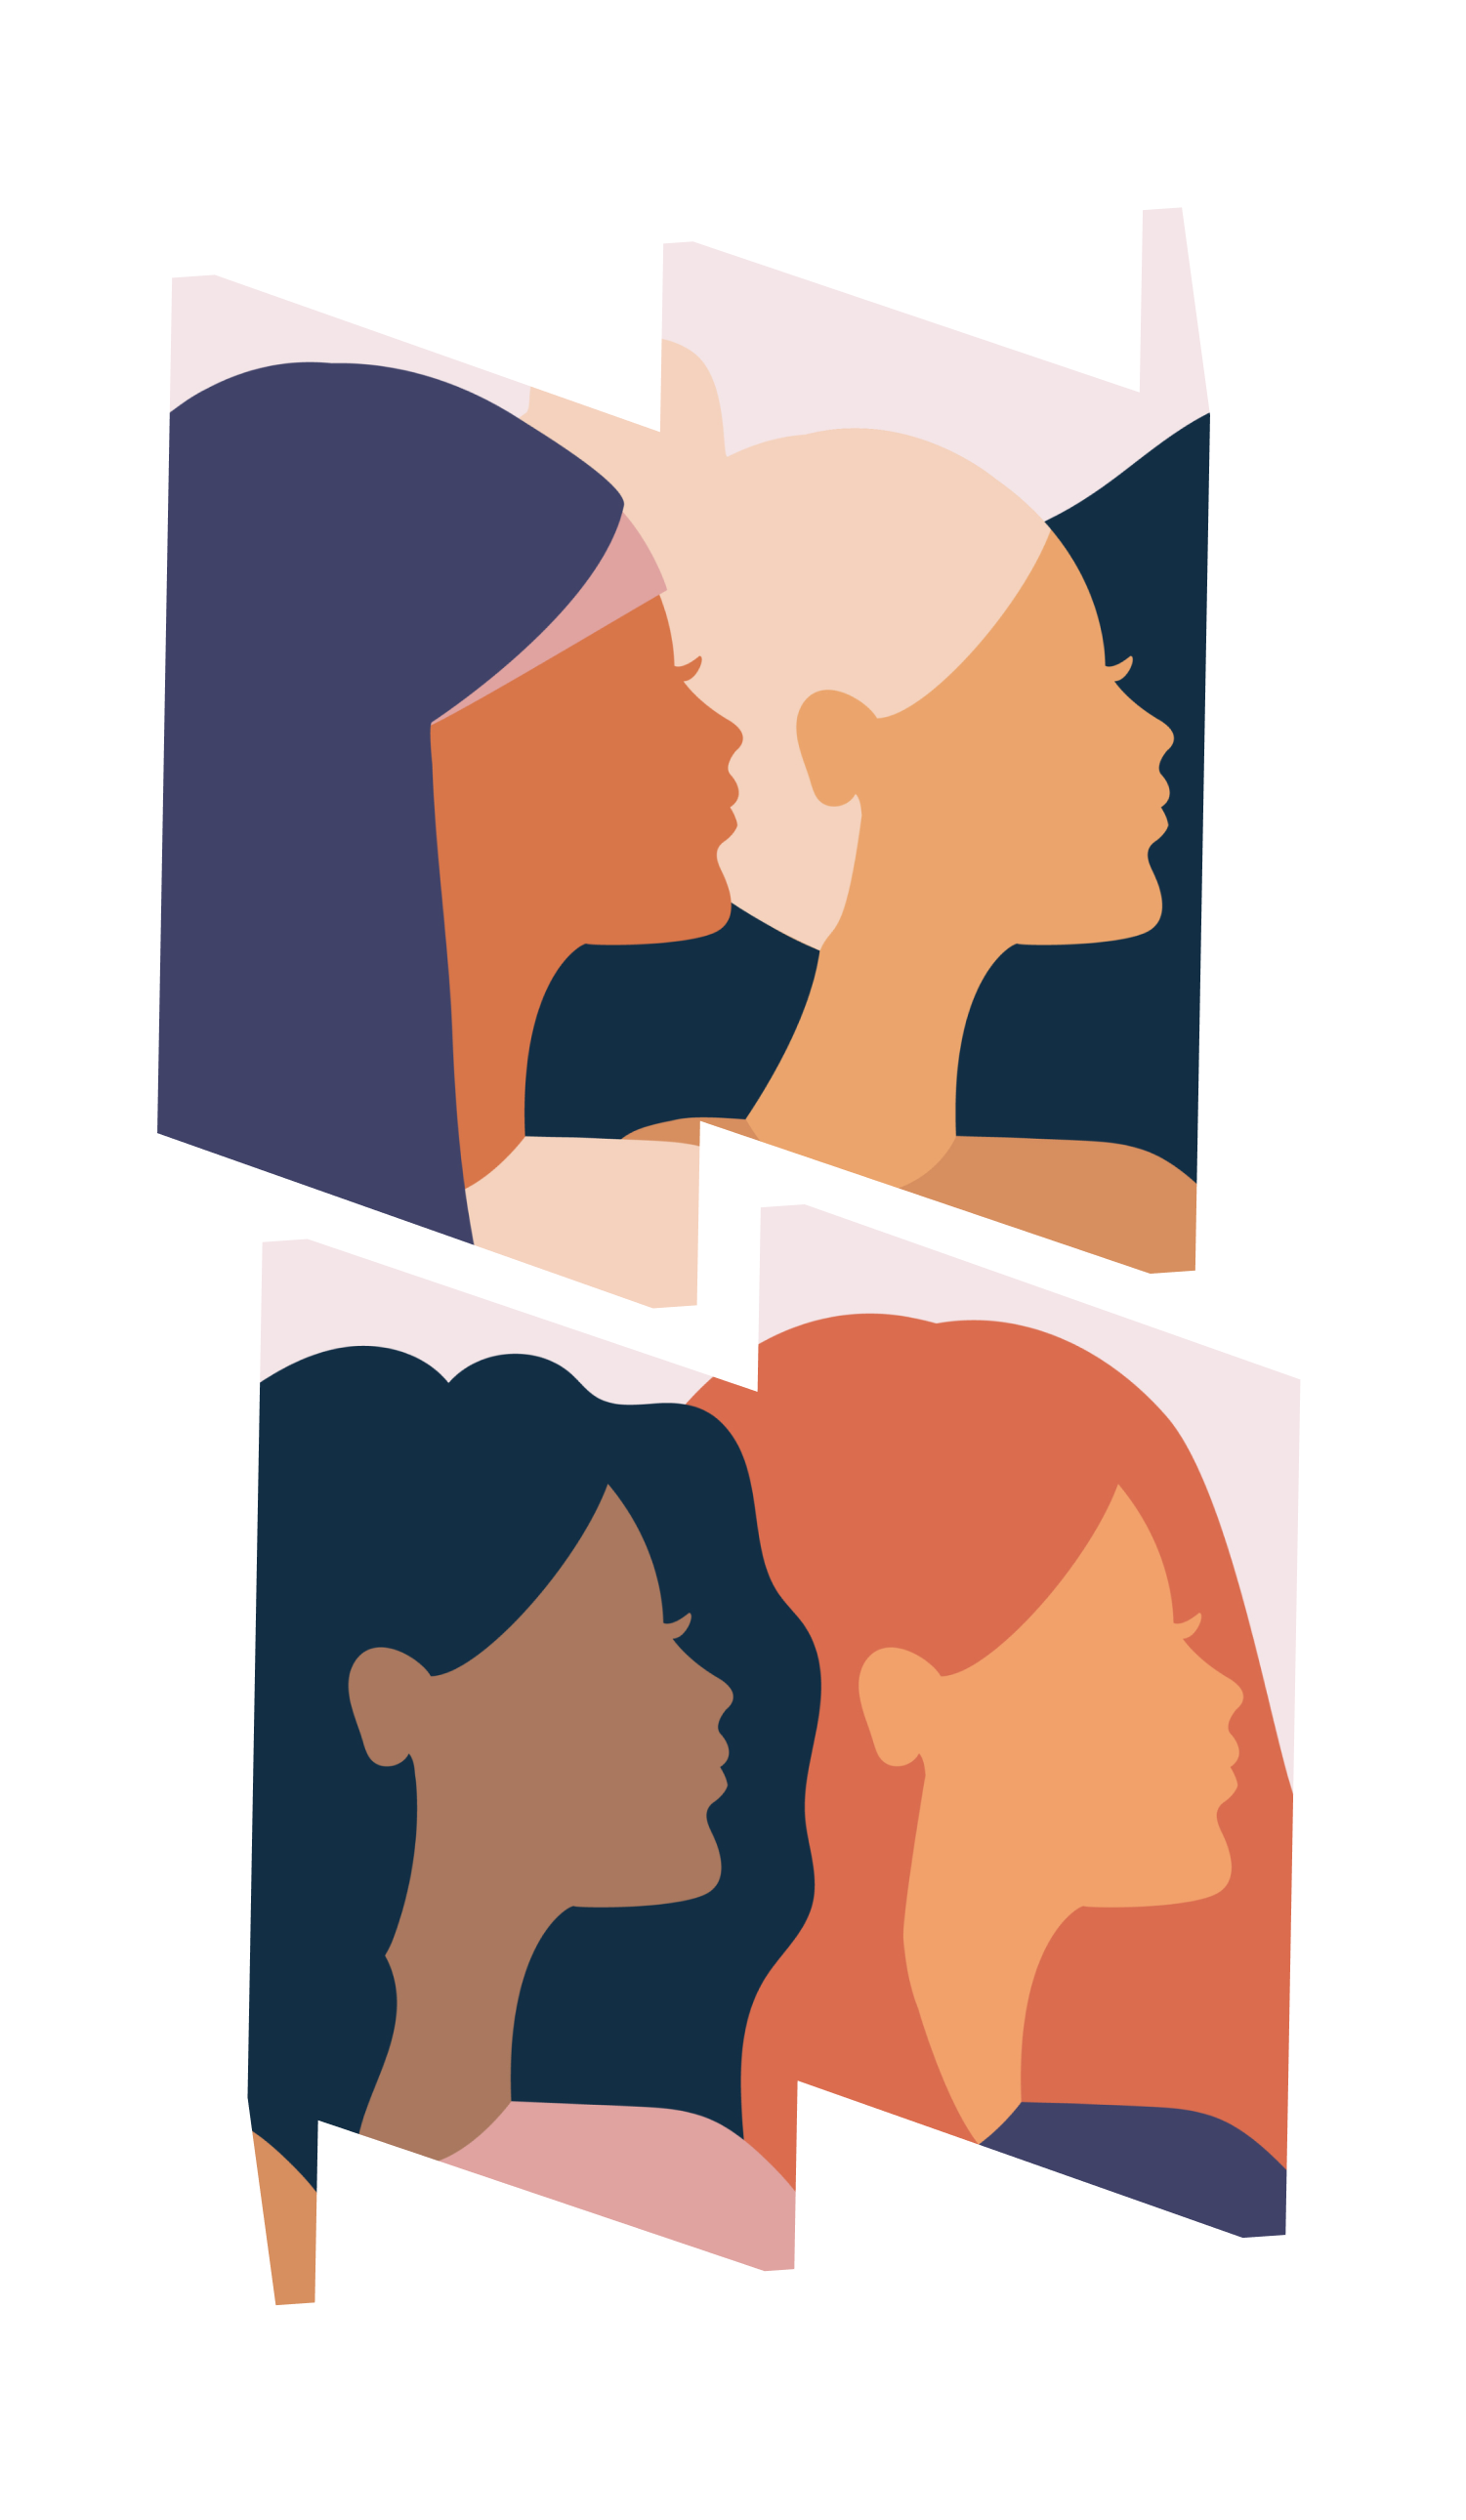 Silhouette illustration of four women in profile.